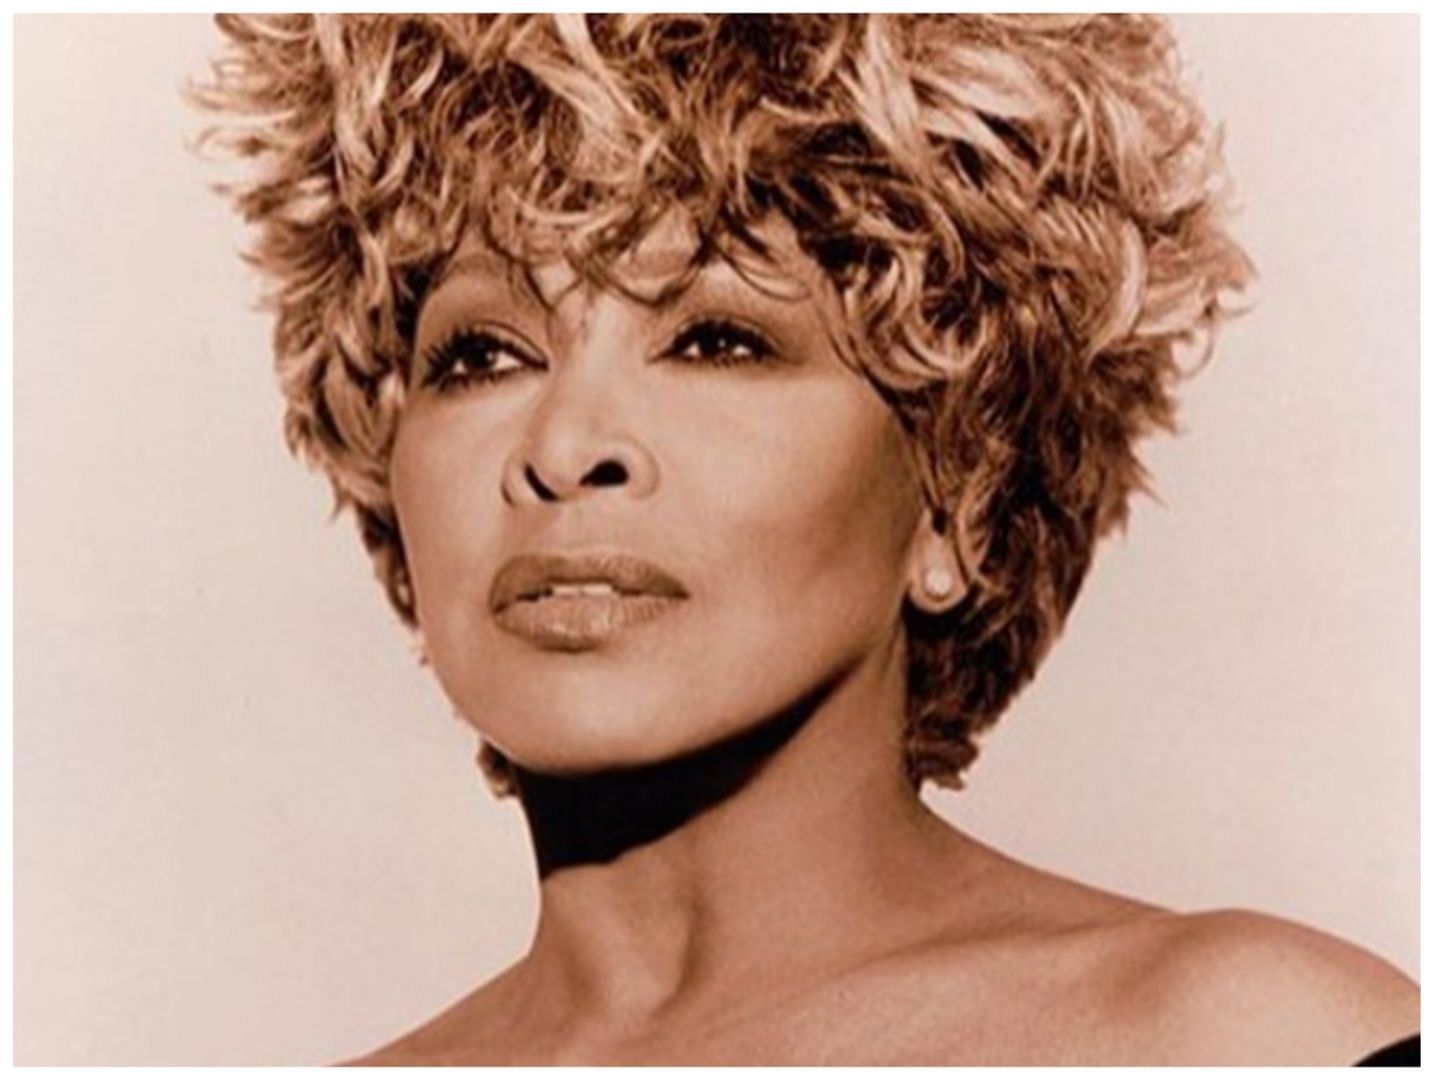 Legendary Singer, Tina Turner, passes away at 83. (Image via IG @ mariannafemme)